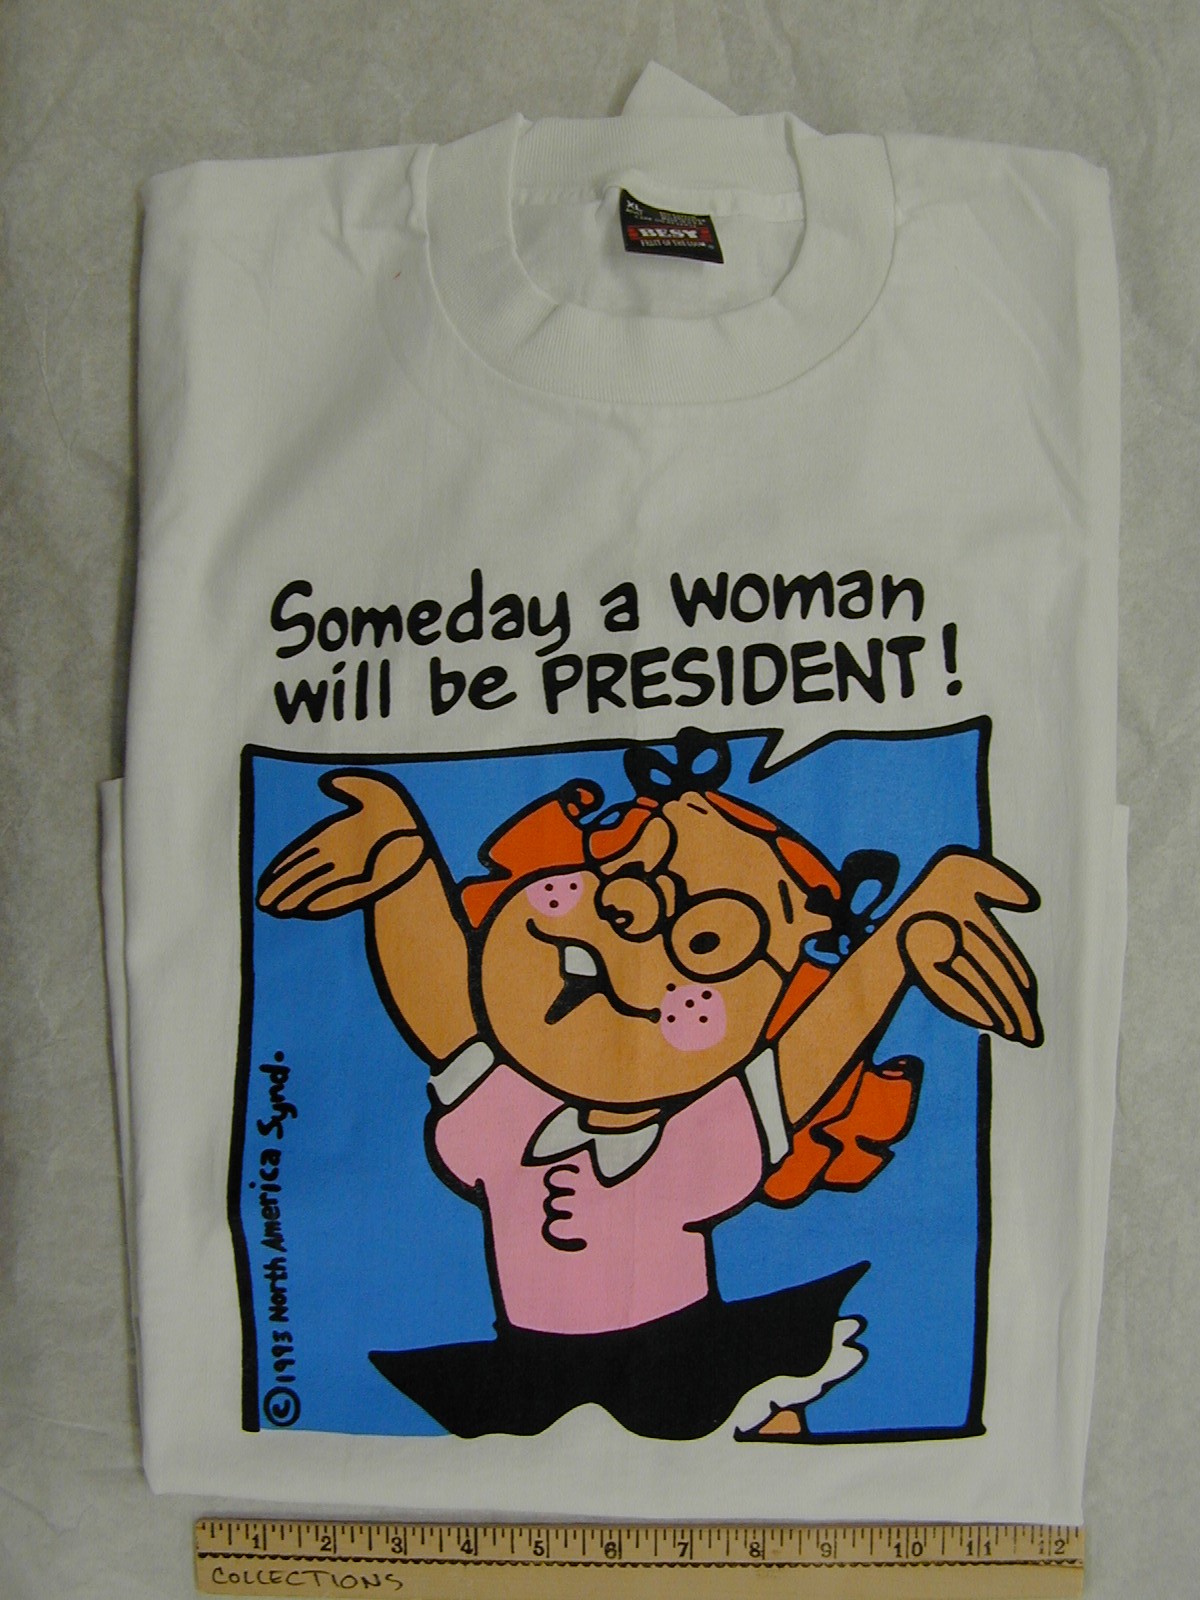 Former Florida House of Representatives member Elaine Gordon gave this T-shirt to Roxcy Bolton,1995